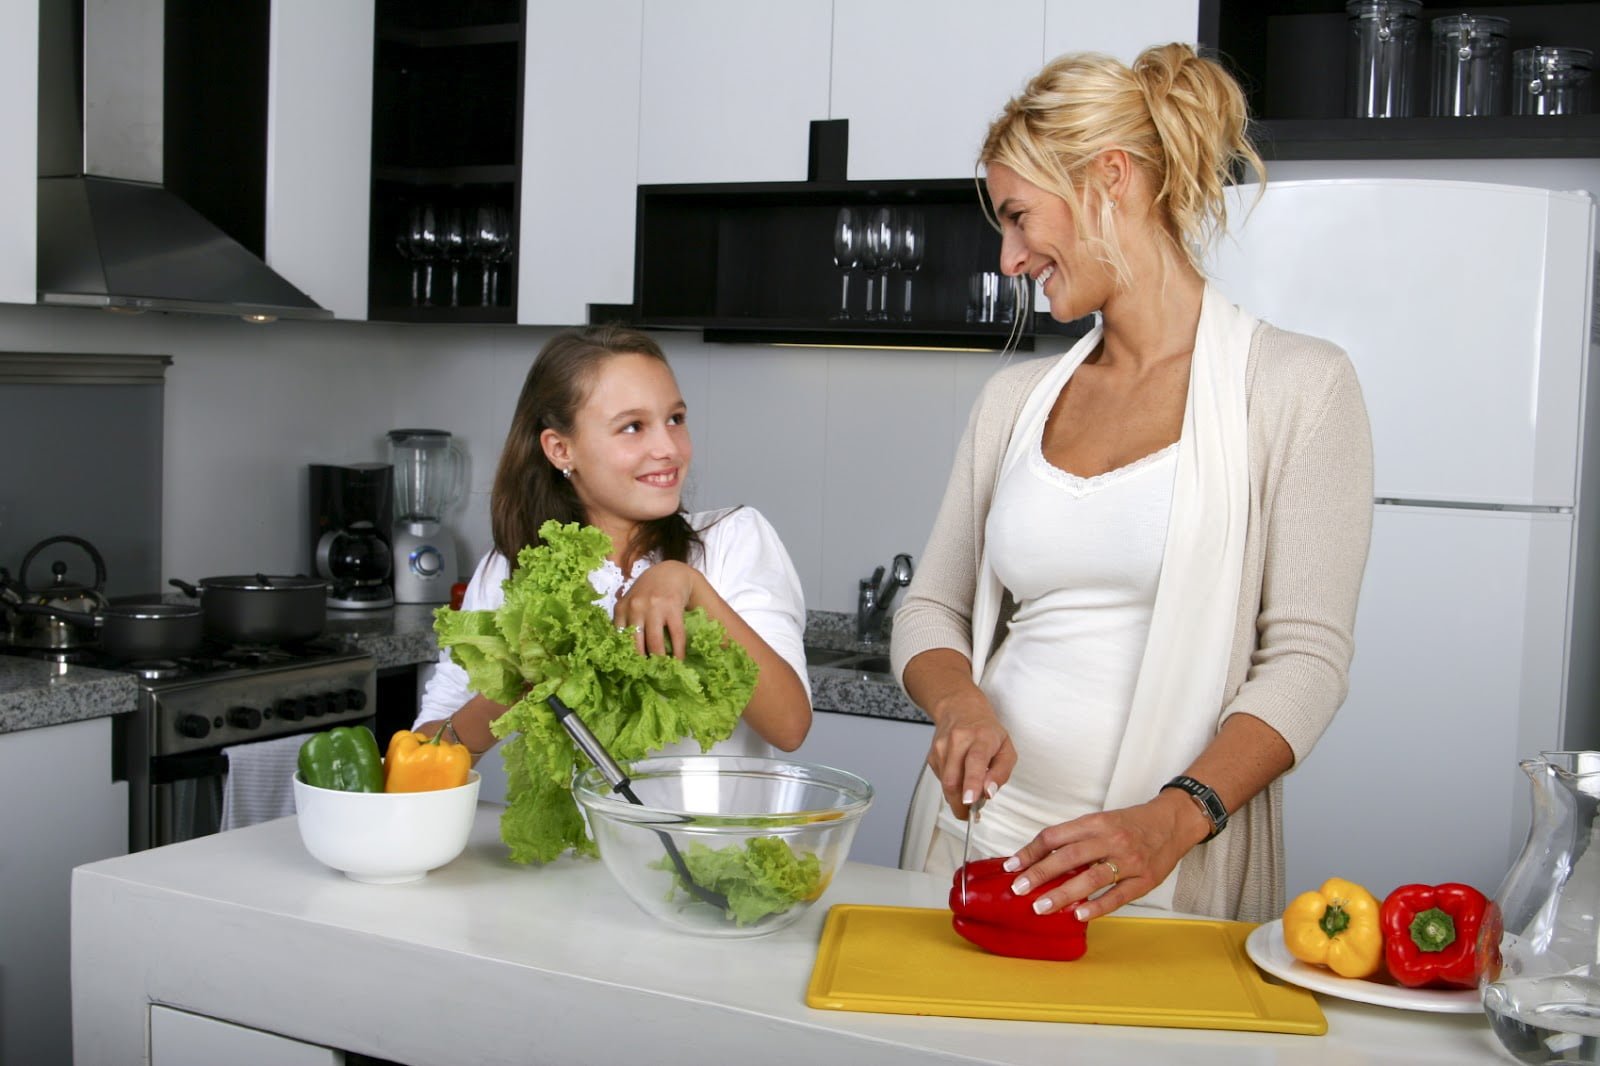 You know cooking. Мама с ребенком на кухне. Женщина с ребенком на кухне. Готовка с детьми на кухне. Кухня для детей.